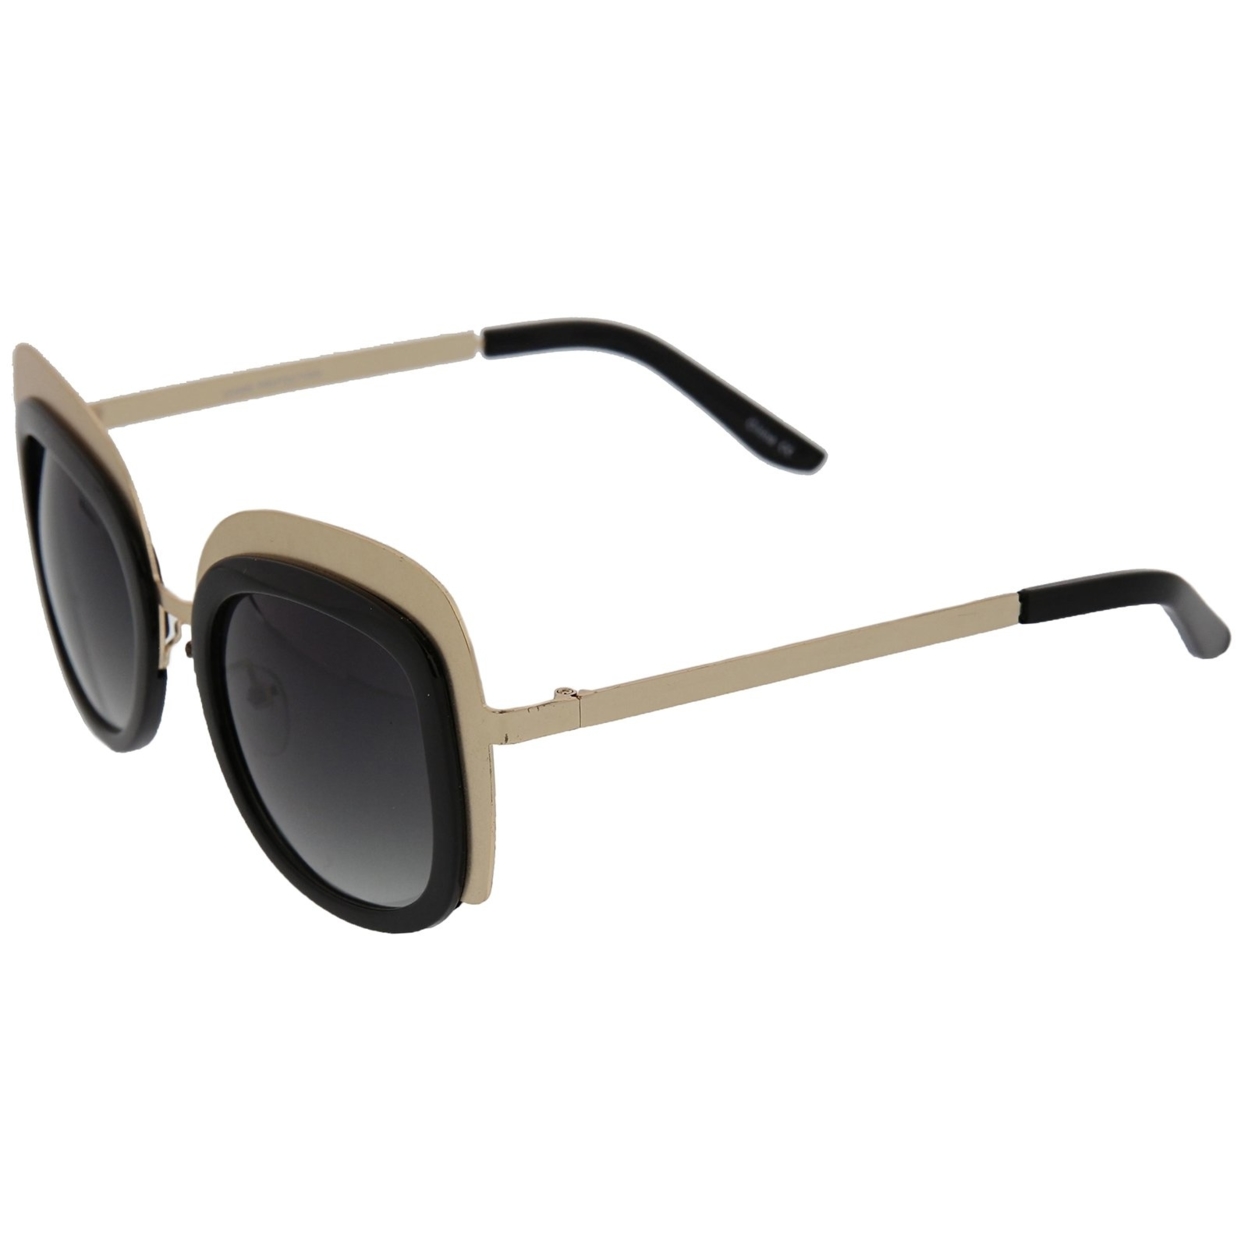 Women's Oversize Two-Tone Metal Frame Border Square Sunglasses 43mm - Gold-Tortoise / Amber